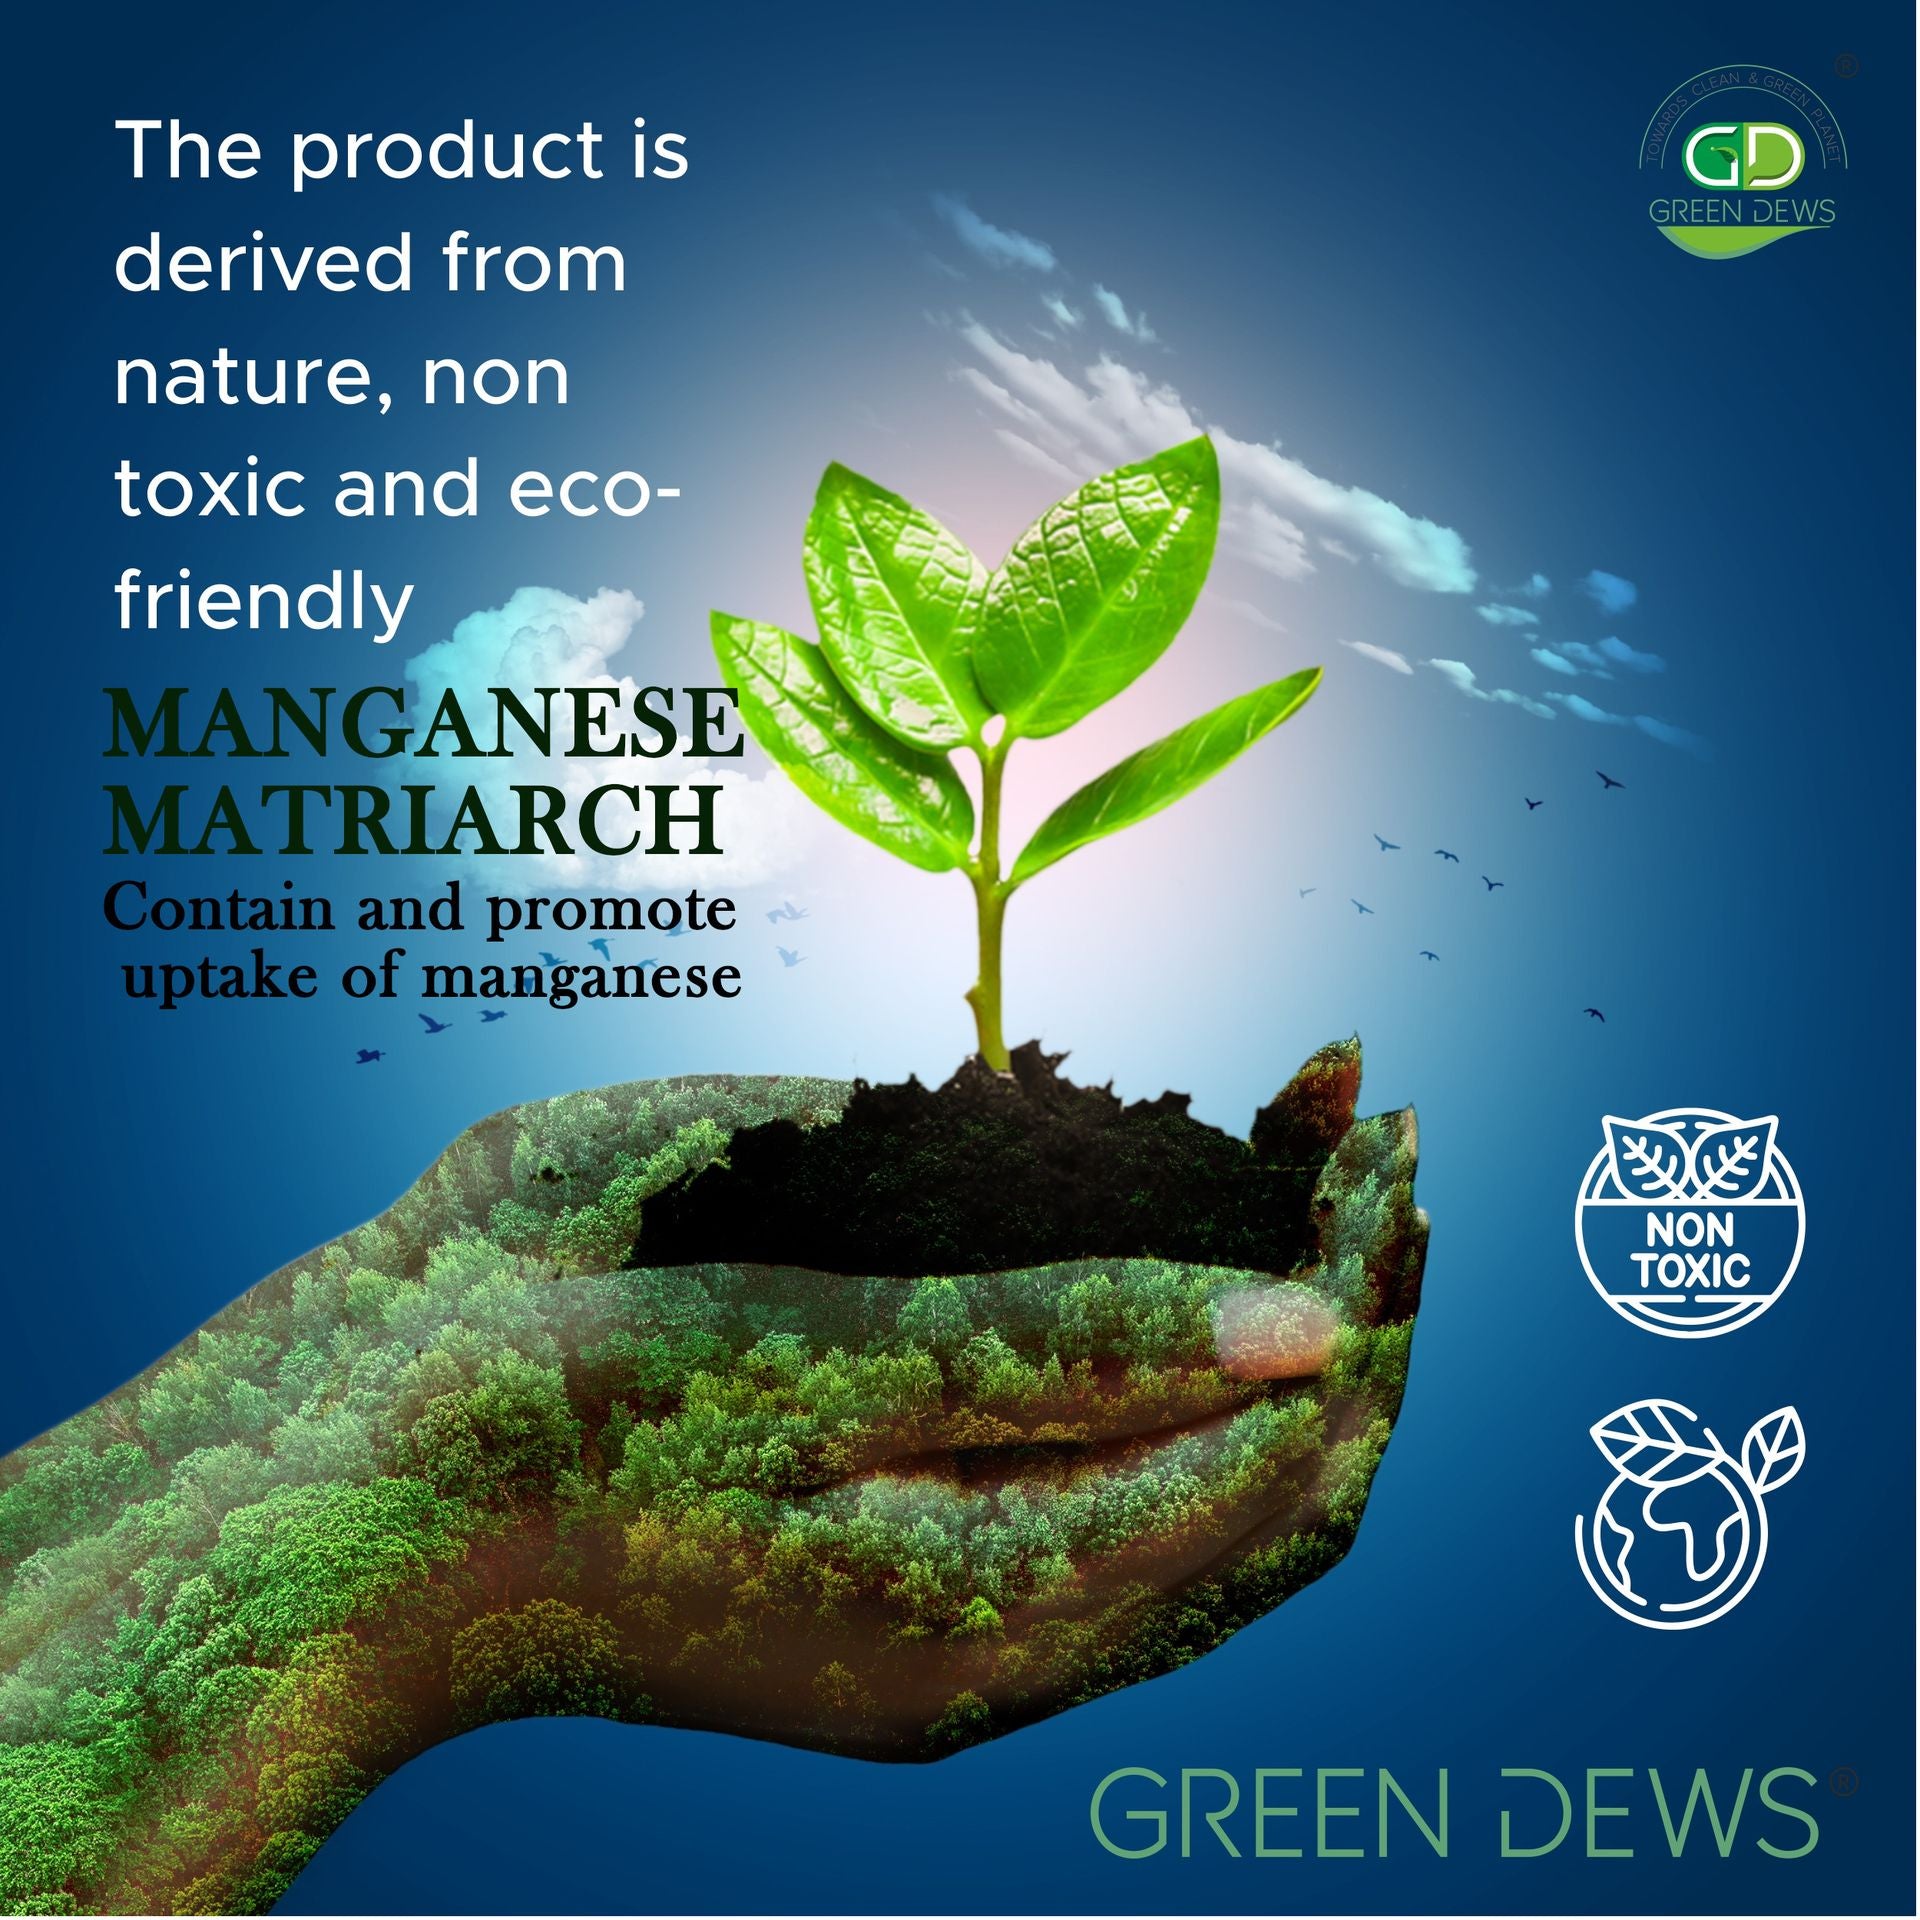 Green Dews Manganese Fertilizer For Plants Organic Liquid MANGANESE MATRIARCH Substitute Of Manganese Sulphate Edta Chelated Manganese Micro Nutrient - hfnl!fe